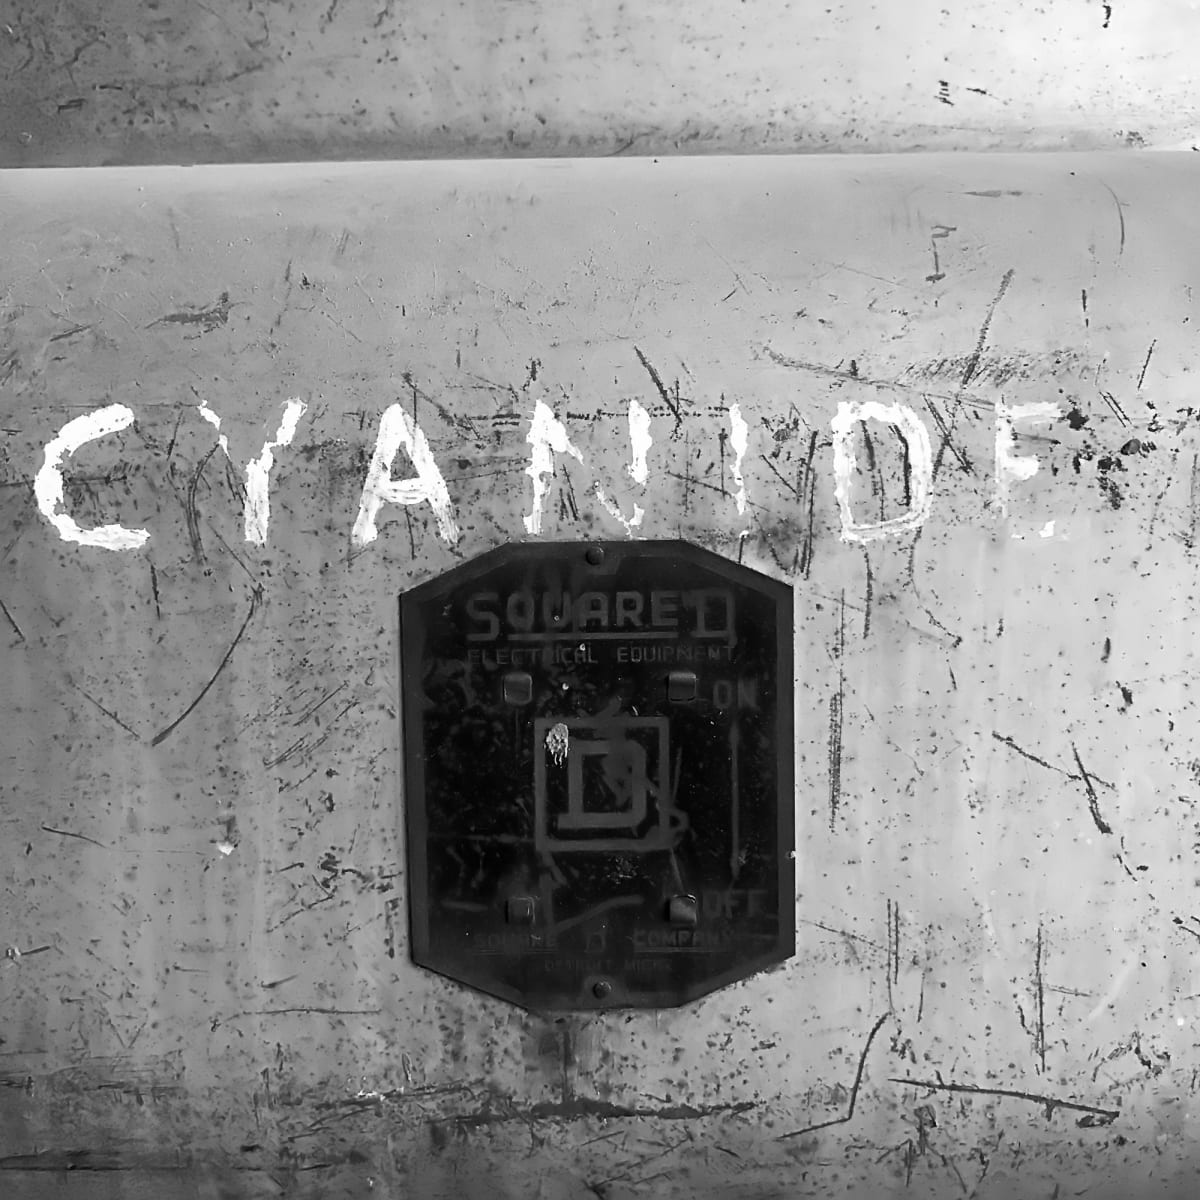 Cyanide by Susan Moldenhauer 